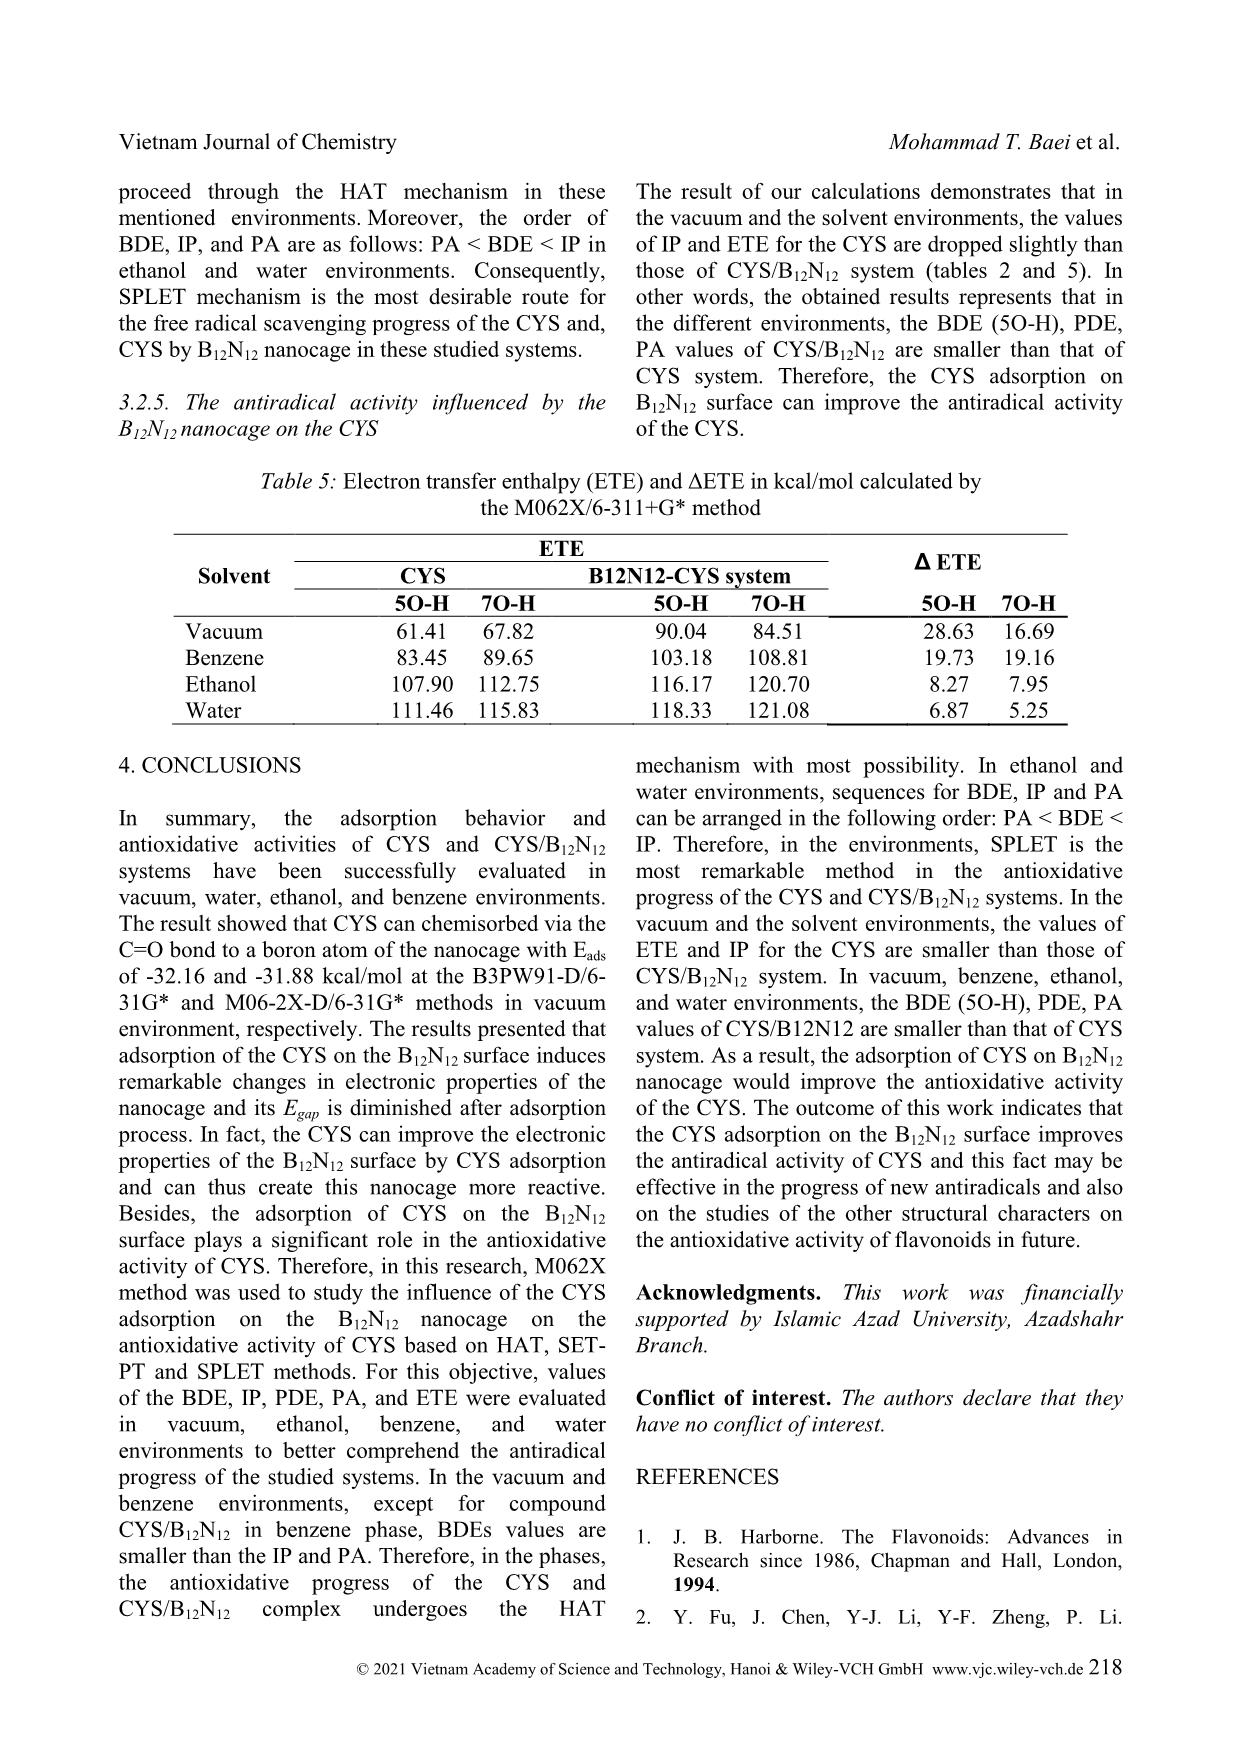 Chrysin flavonoid adsorbed on B12N12 nanocage - A novel antioxidant nanomaterial trang 8